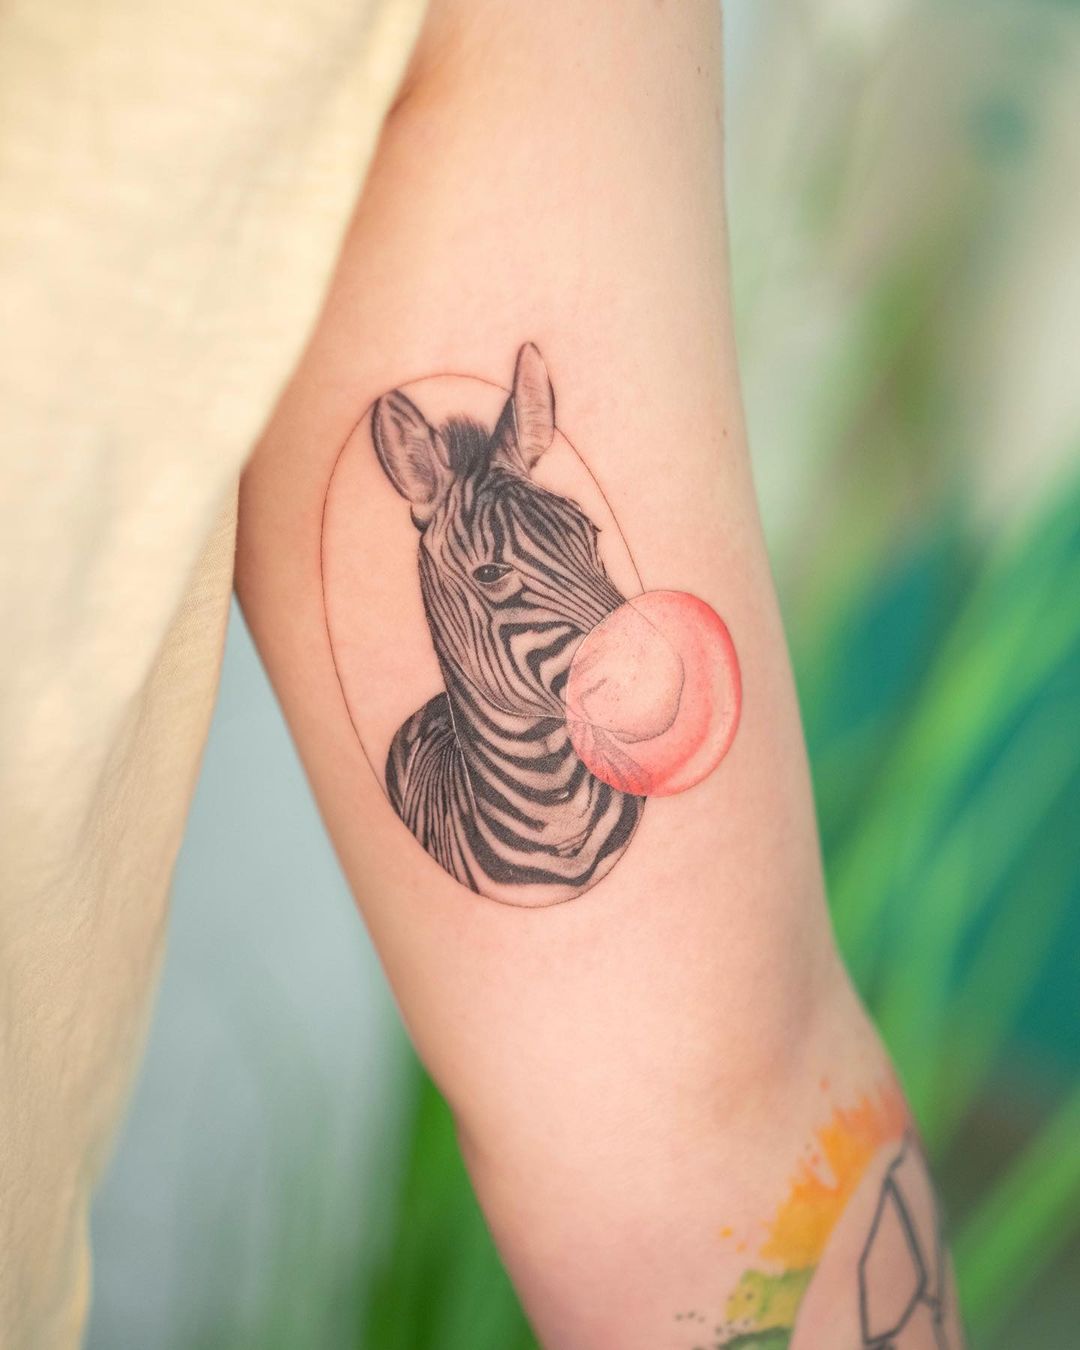 Cartoonnish zebra tattoo design by belmontetattoo